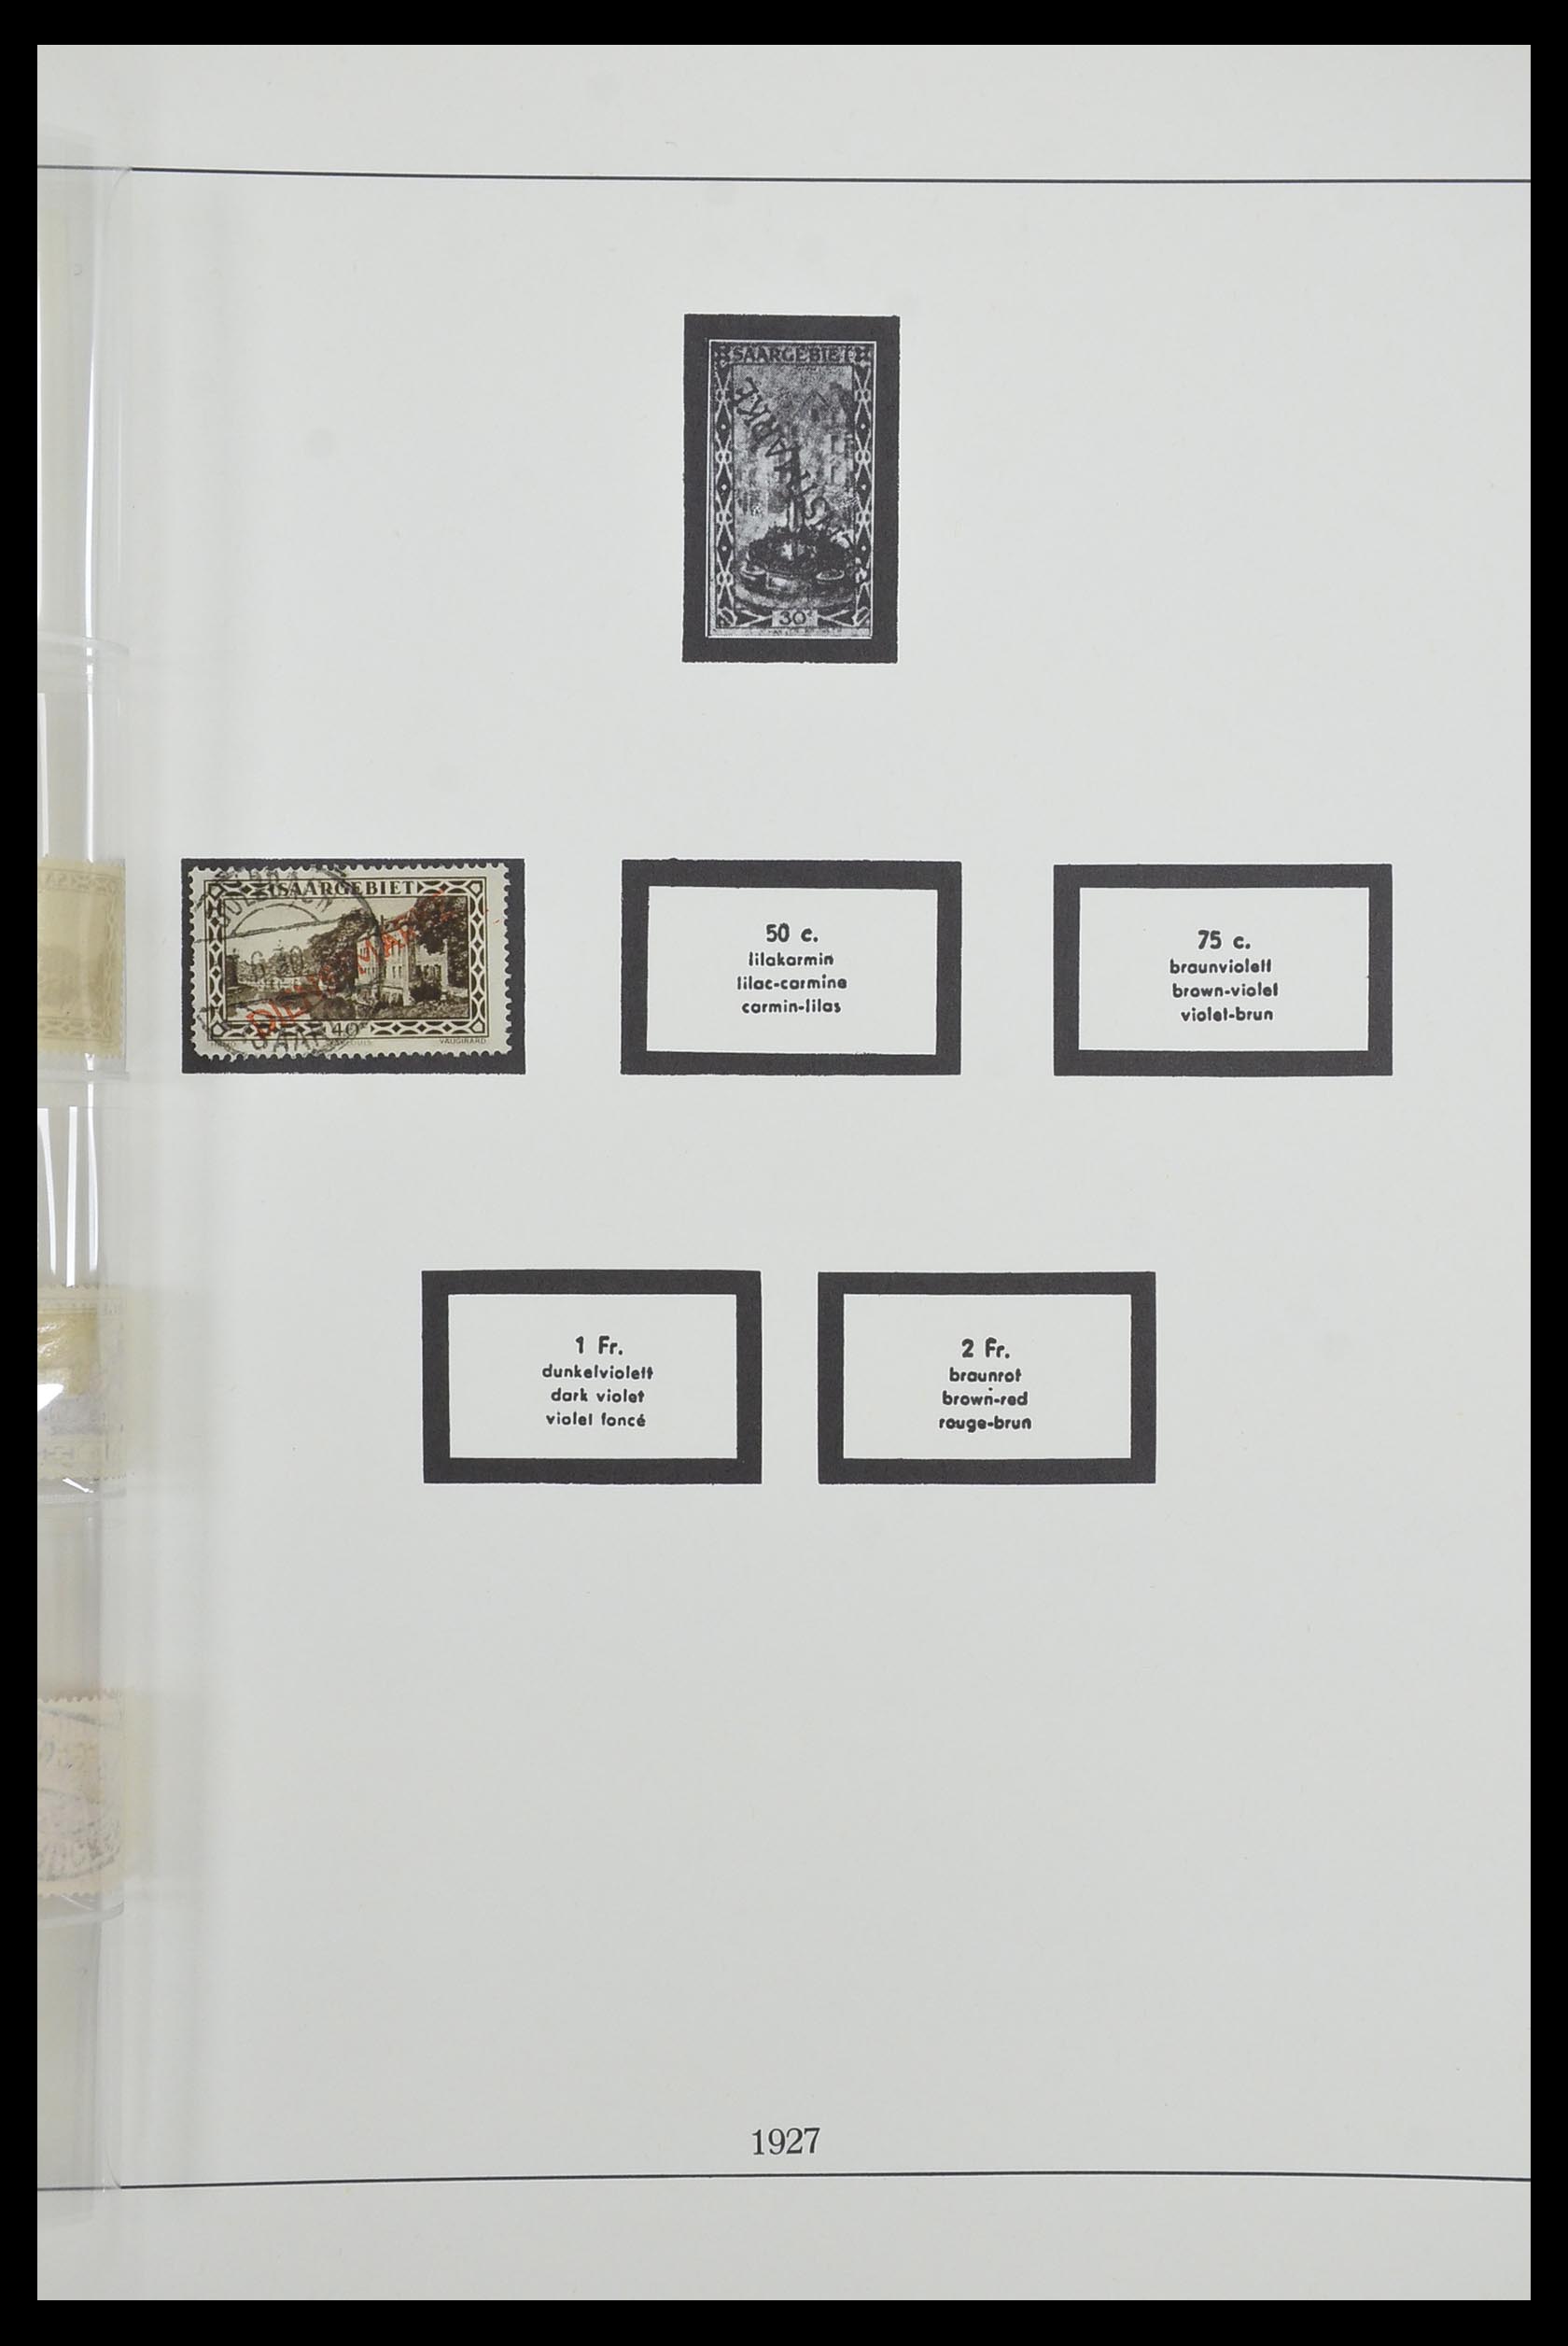 33485 029 - Stamp collection 33485 Saar 1920-1959.